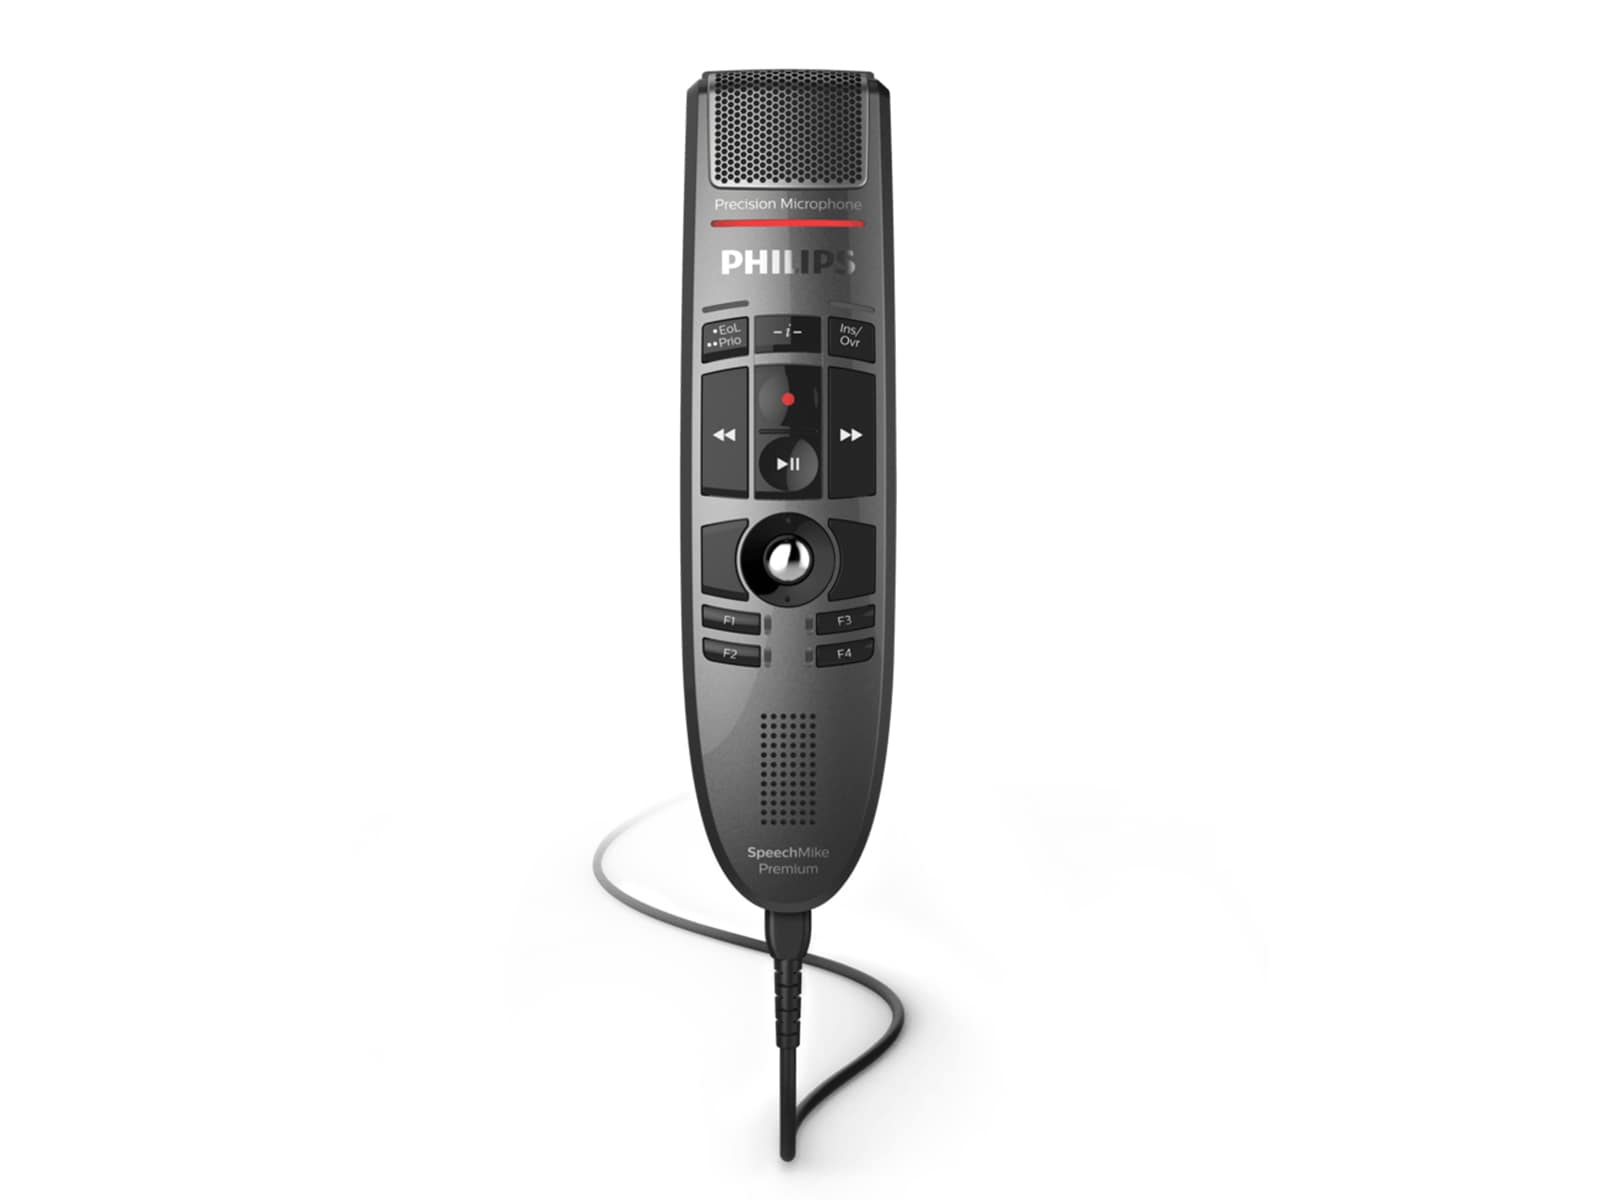 Philips SpeechMike Premium Micrófono de dictado con botón táctil y trackball (LFH3500) Monitors.com